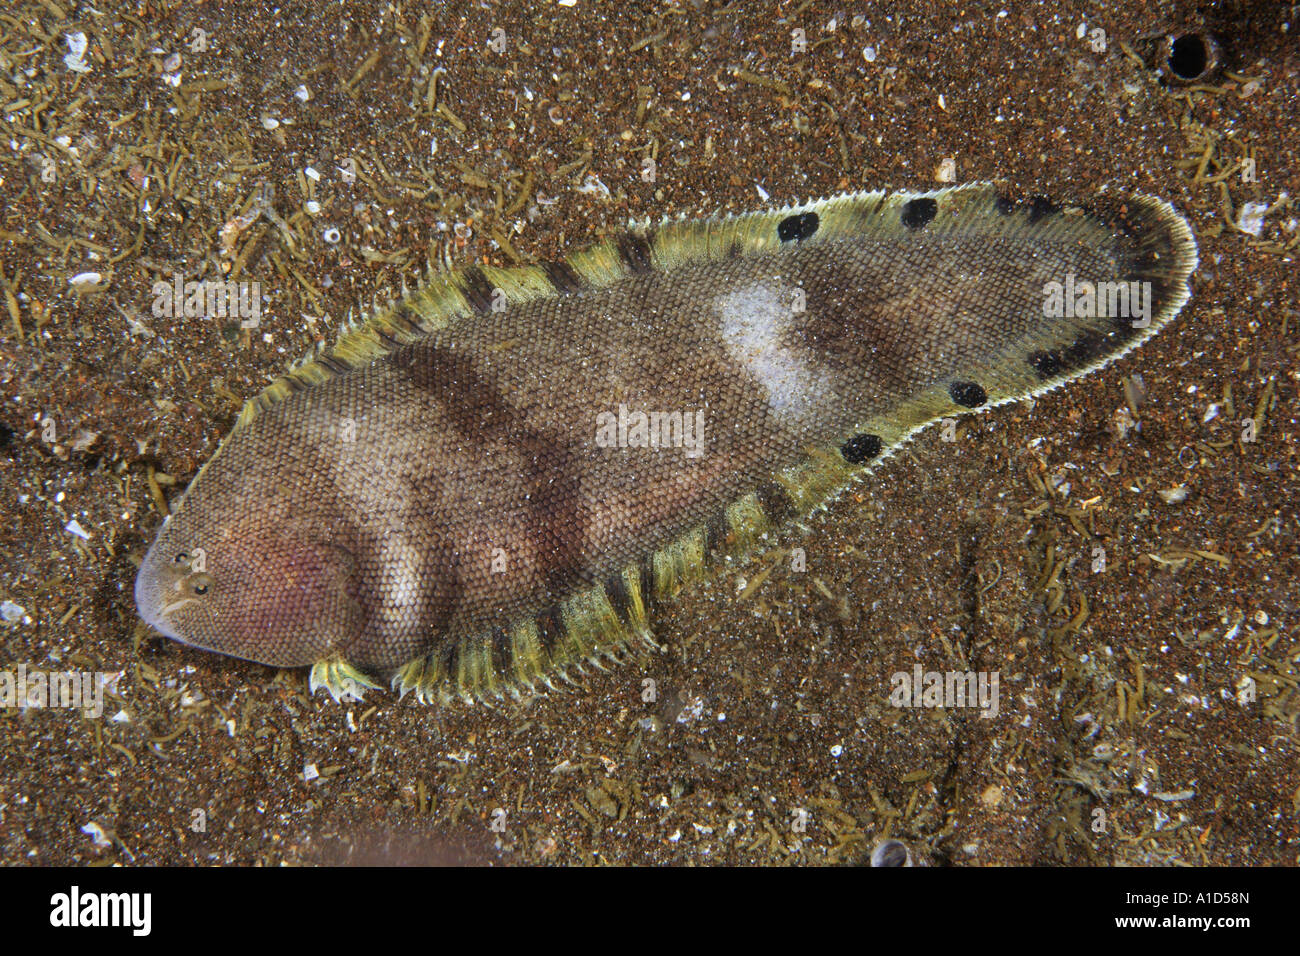 nu2270. Halfspotted Tonguefish, Symphurus atramentatus. Galapagos Islands, Ecuador. Pacific Ocean. Photo Copyright Brandon Cole Stock Photo